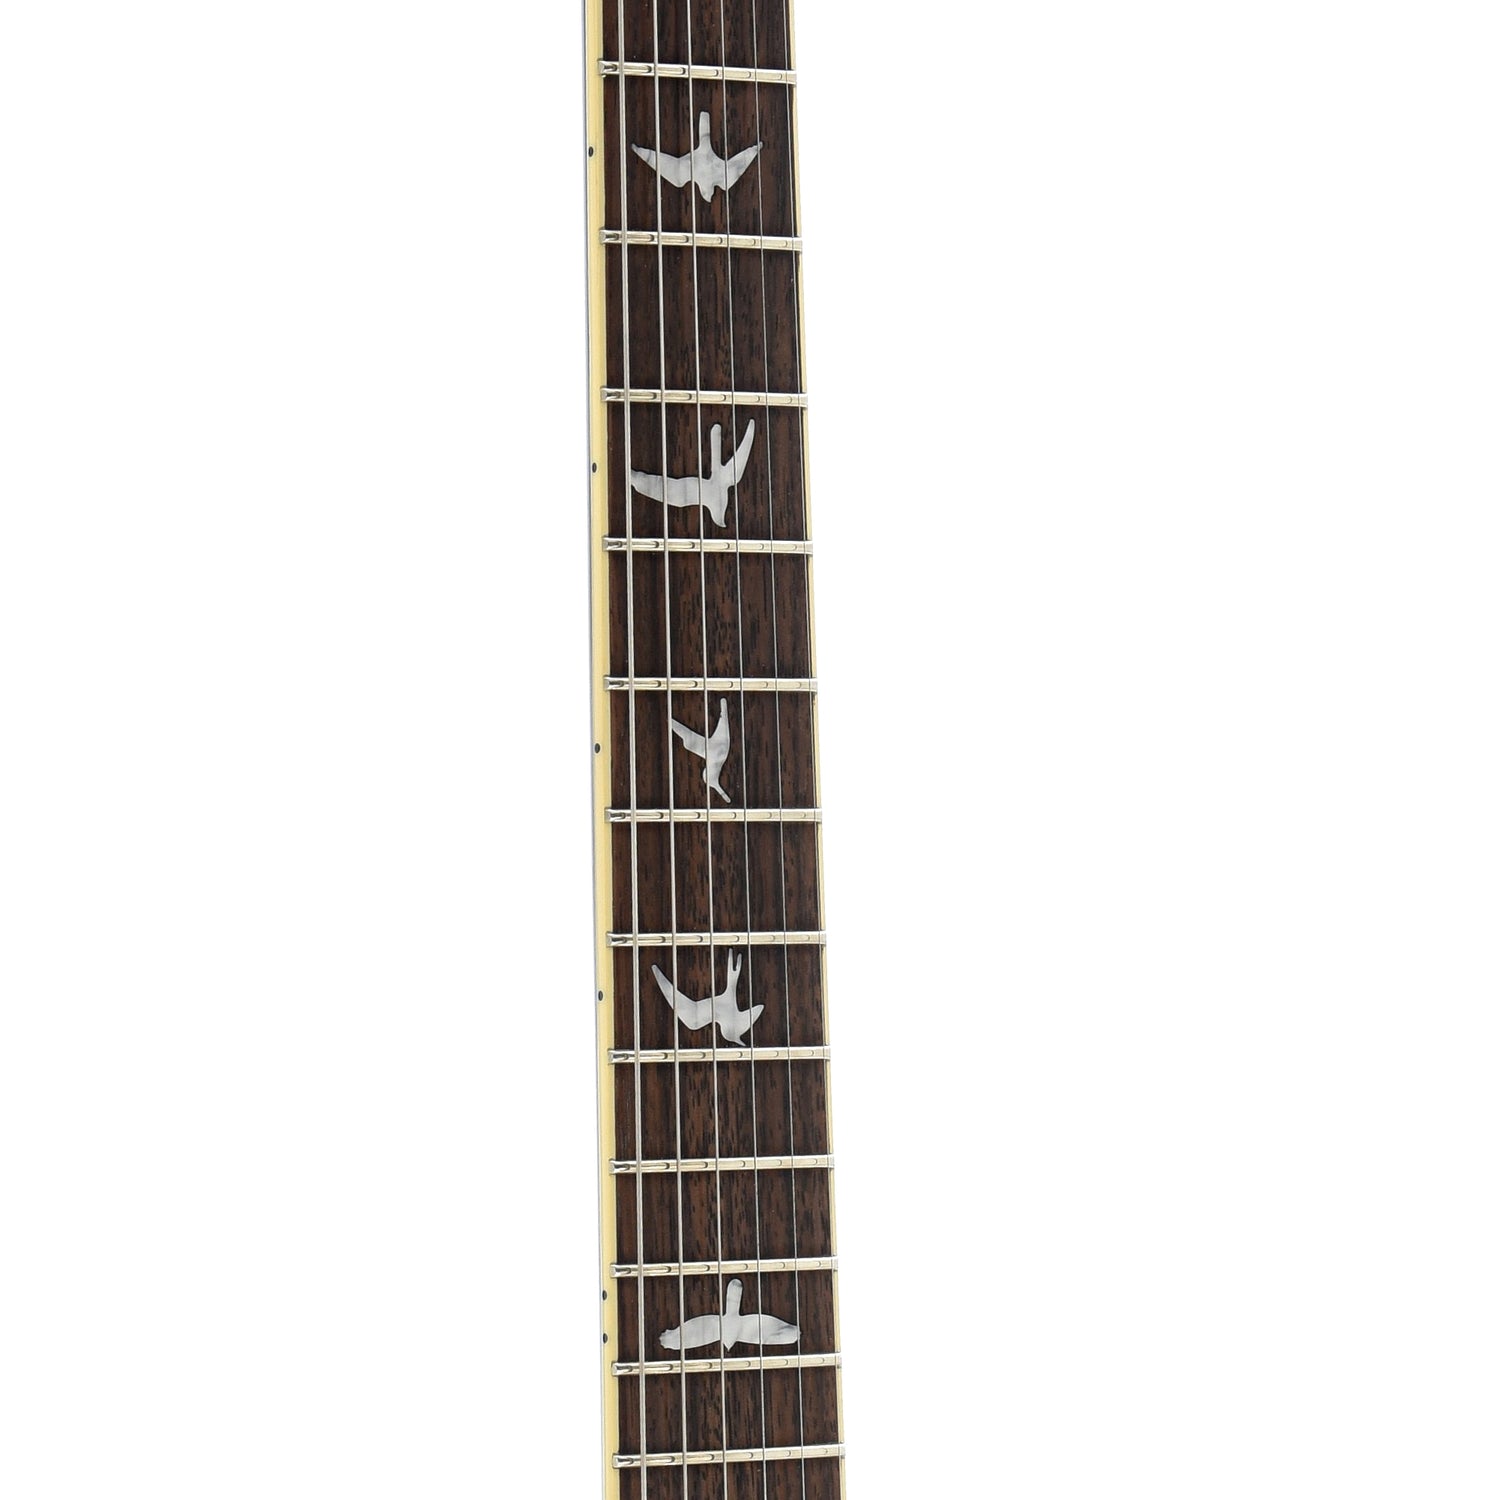 Fretboard of PRS SE Standard 24 Electric Guitar